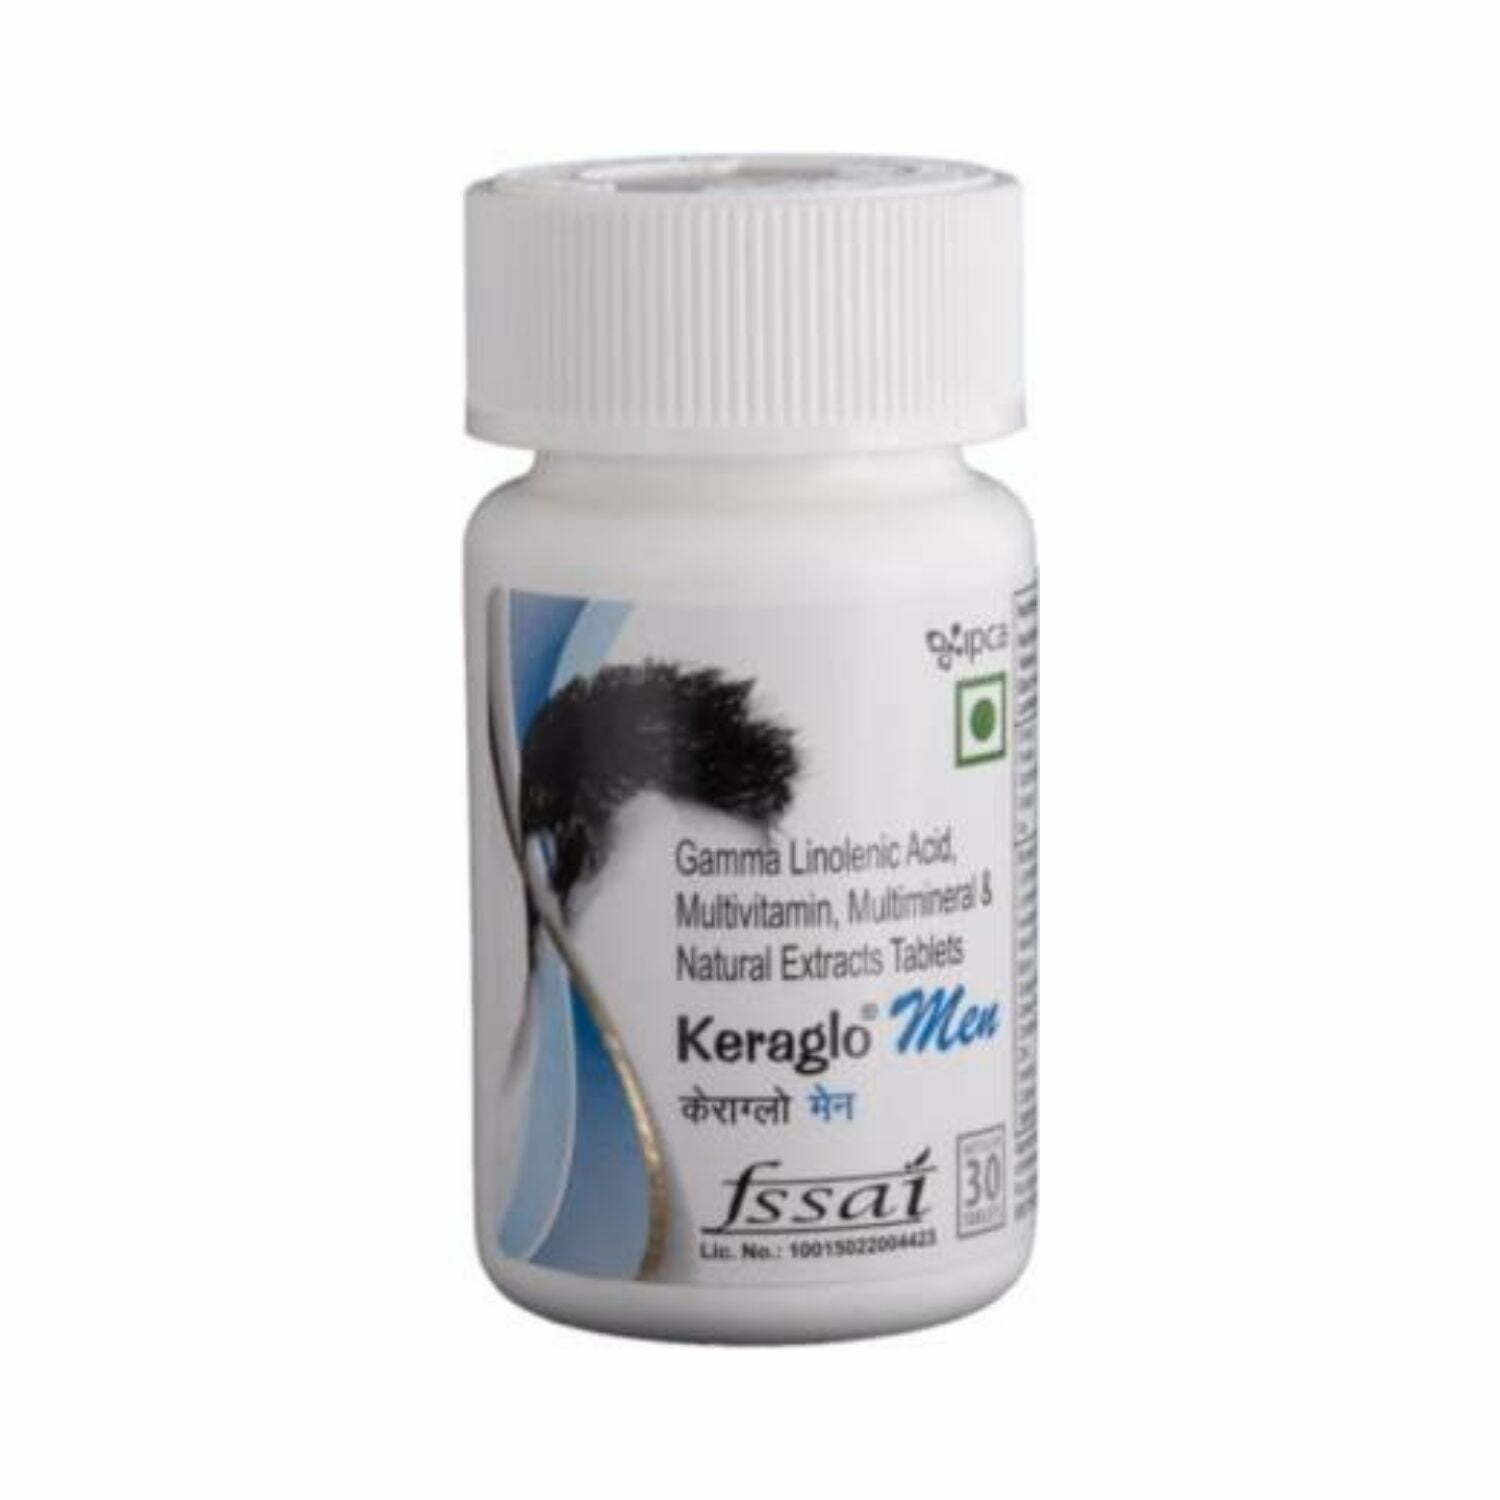 Buy Keraglo Men | Dr. S - The Online Skin Store